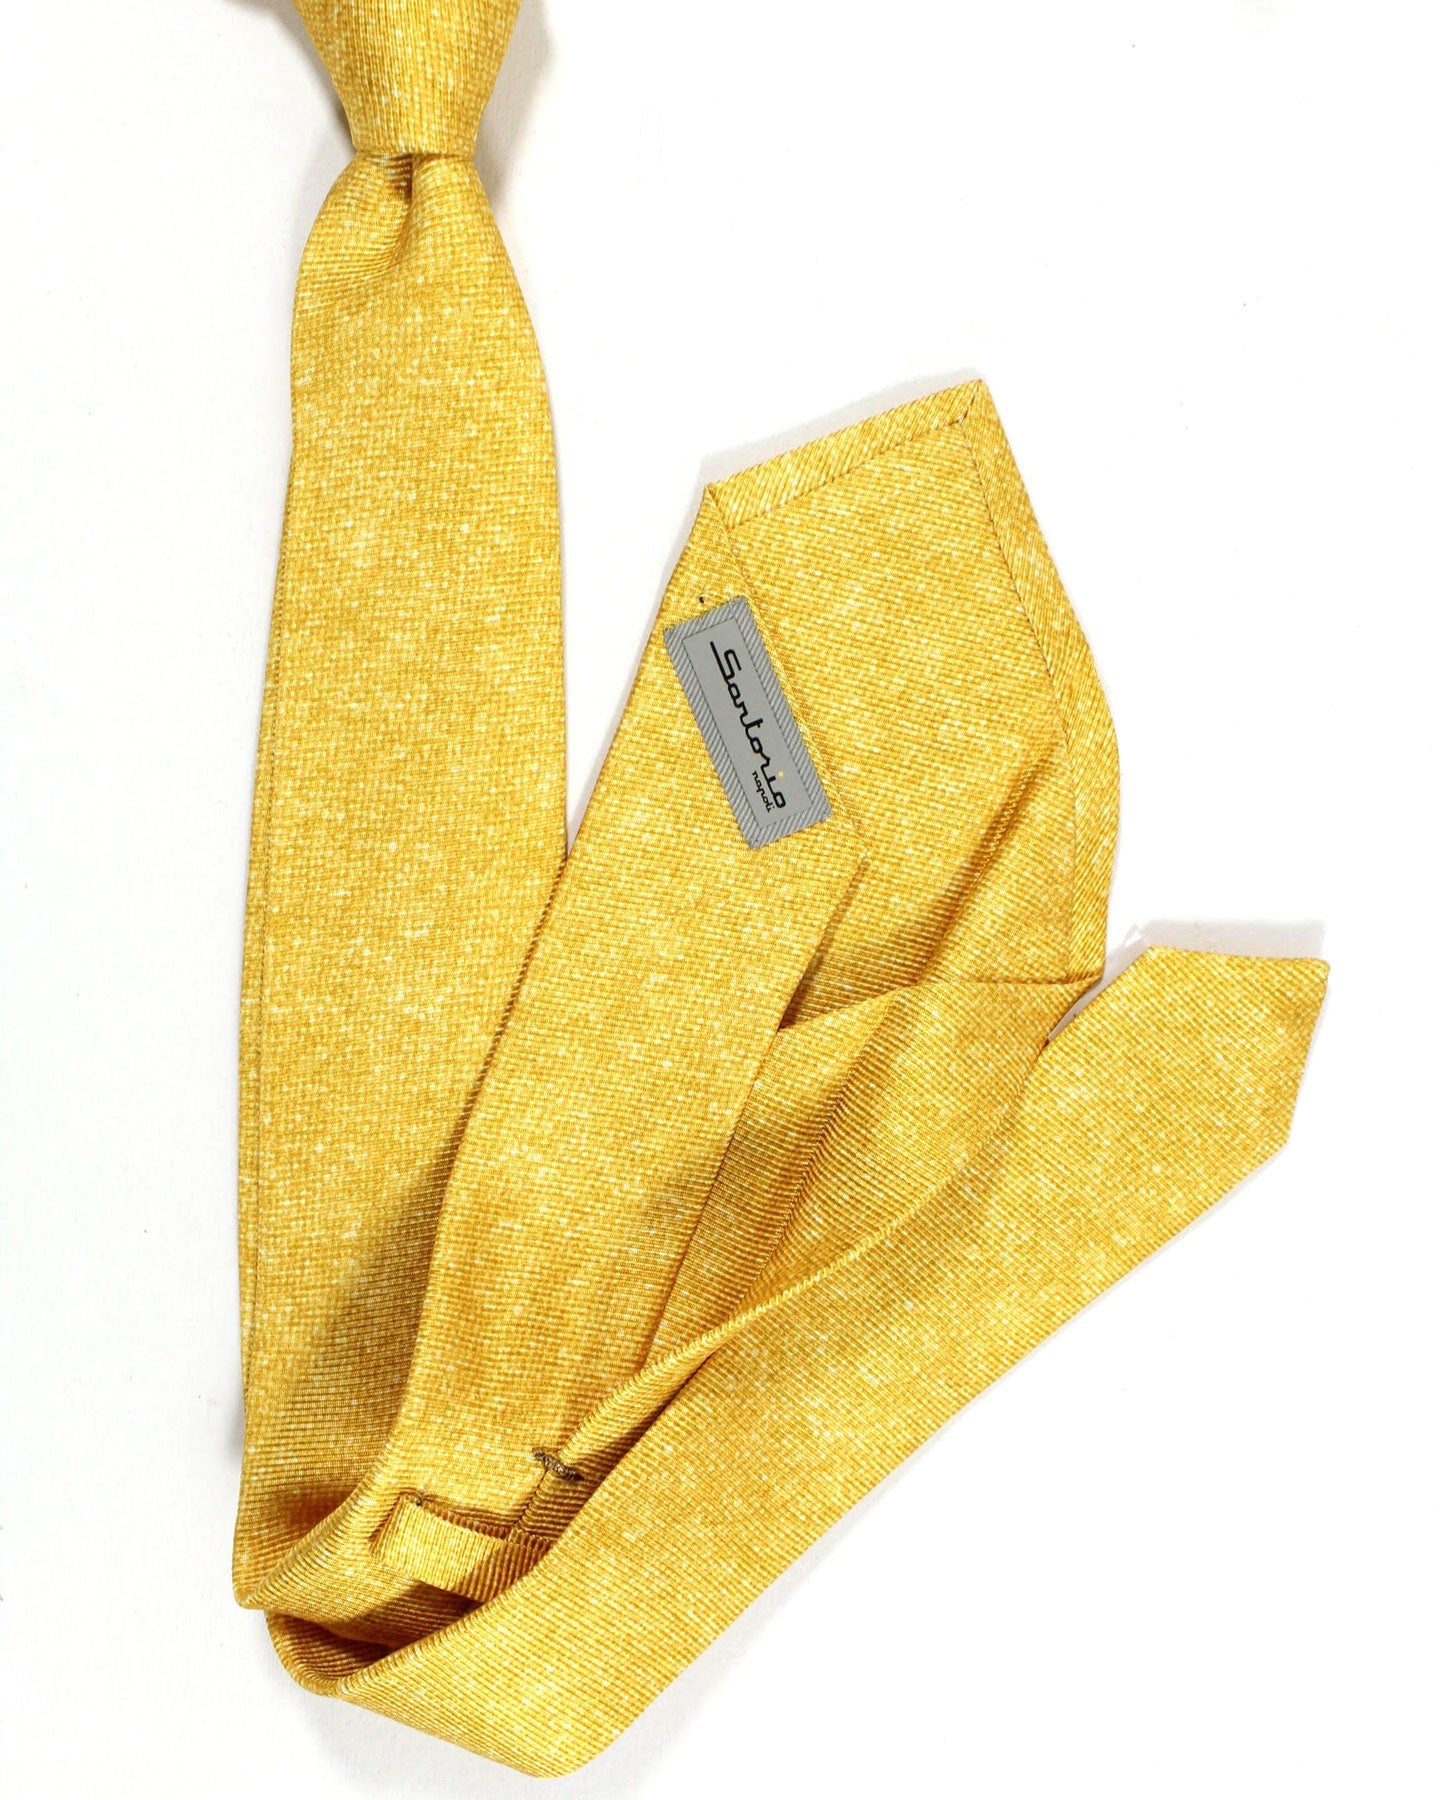 Sartorio Sevenfold Tie Mustard Texture Pattern - Narrow Cut